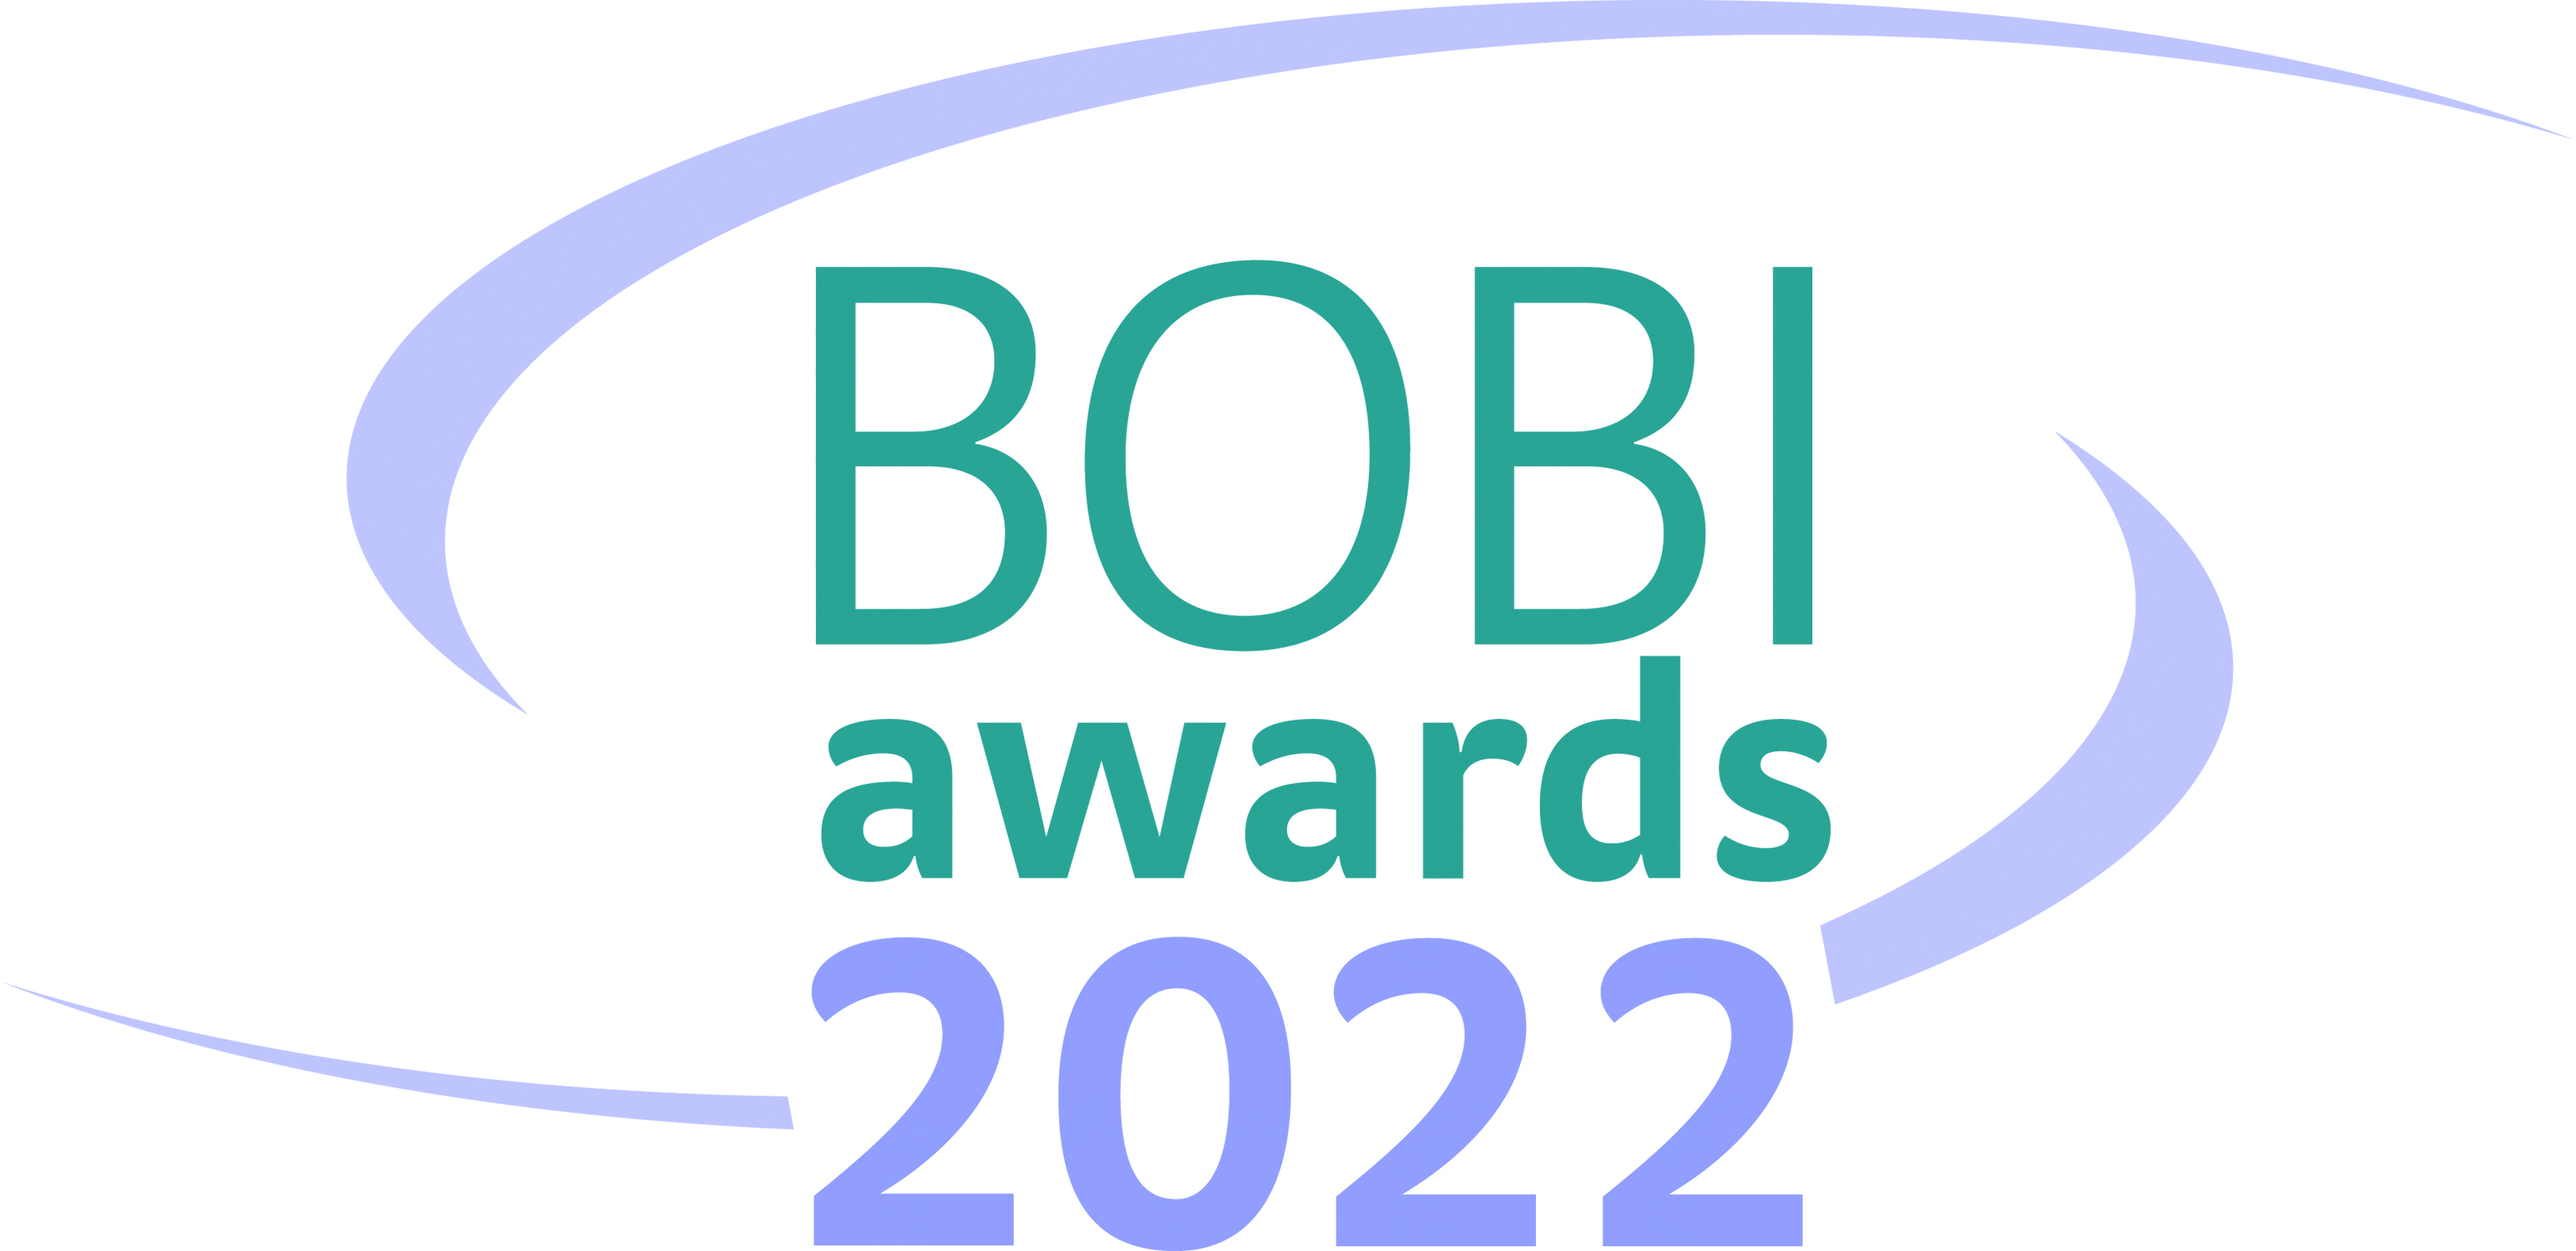 BOBI Awards 2022 - Best Business Impact finalist